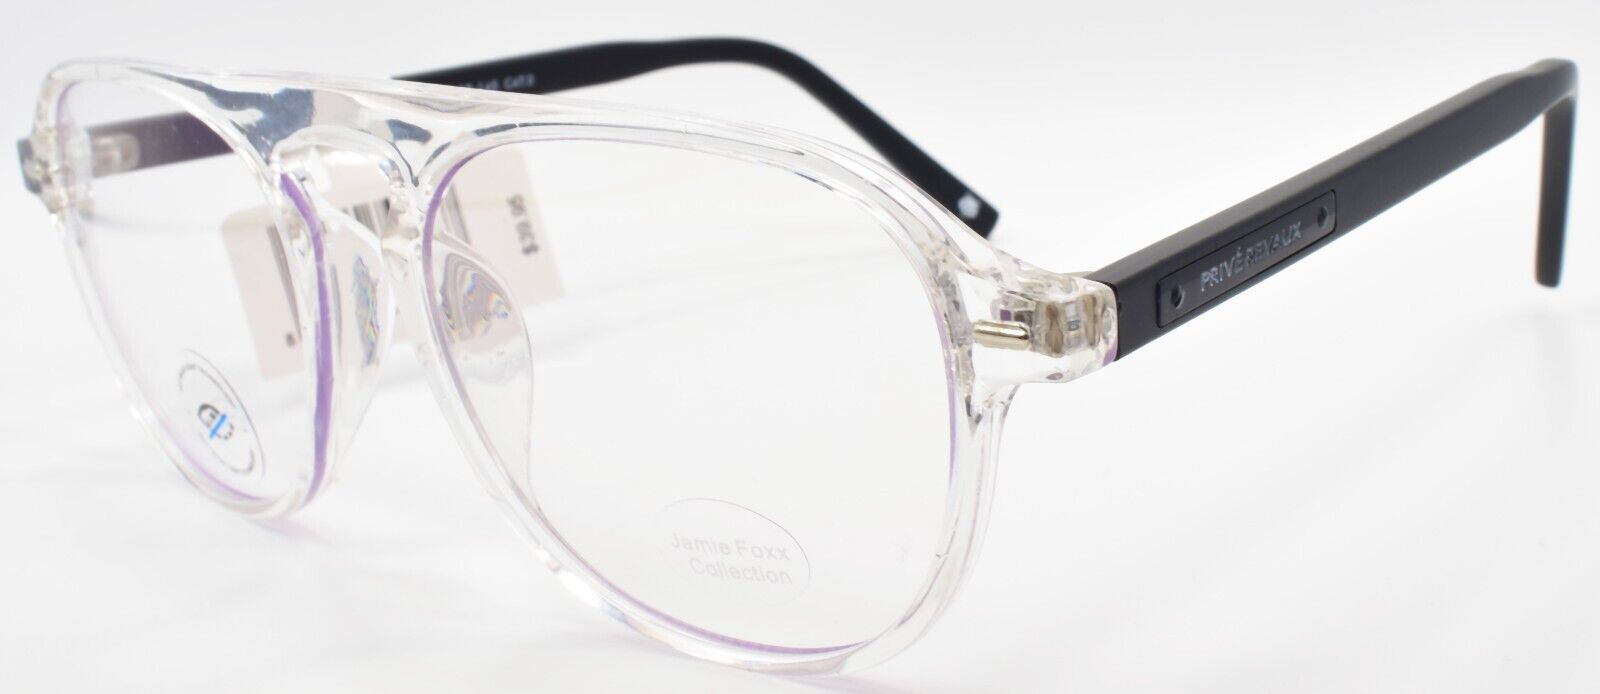 1-Prive Revaux Sparrow Eyeglasses Blue Light Blocking RX-ready Clear / Black-810054746867-IKSpecs